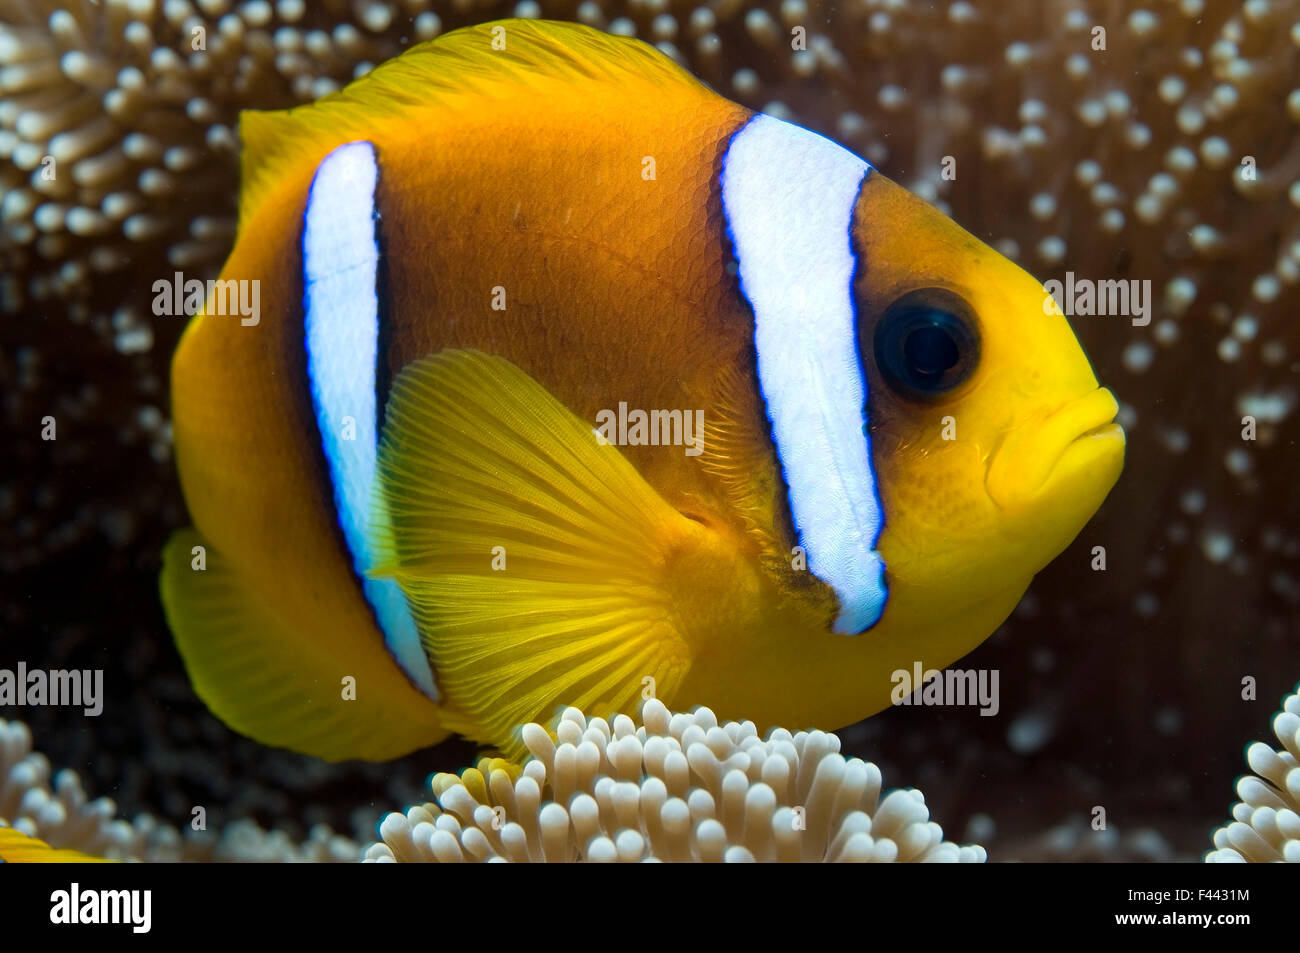 Red Sea anemonefish (Amphiprion bicinctus) in sea-anemone, Red Sea. Stock Photo